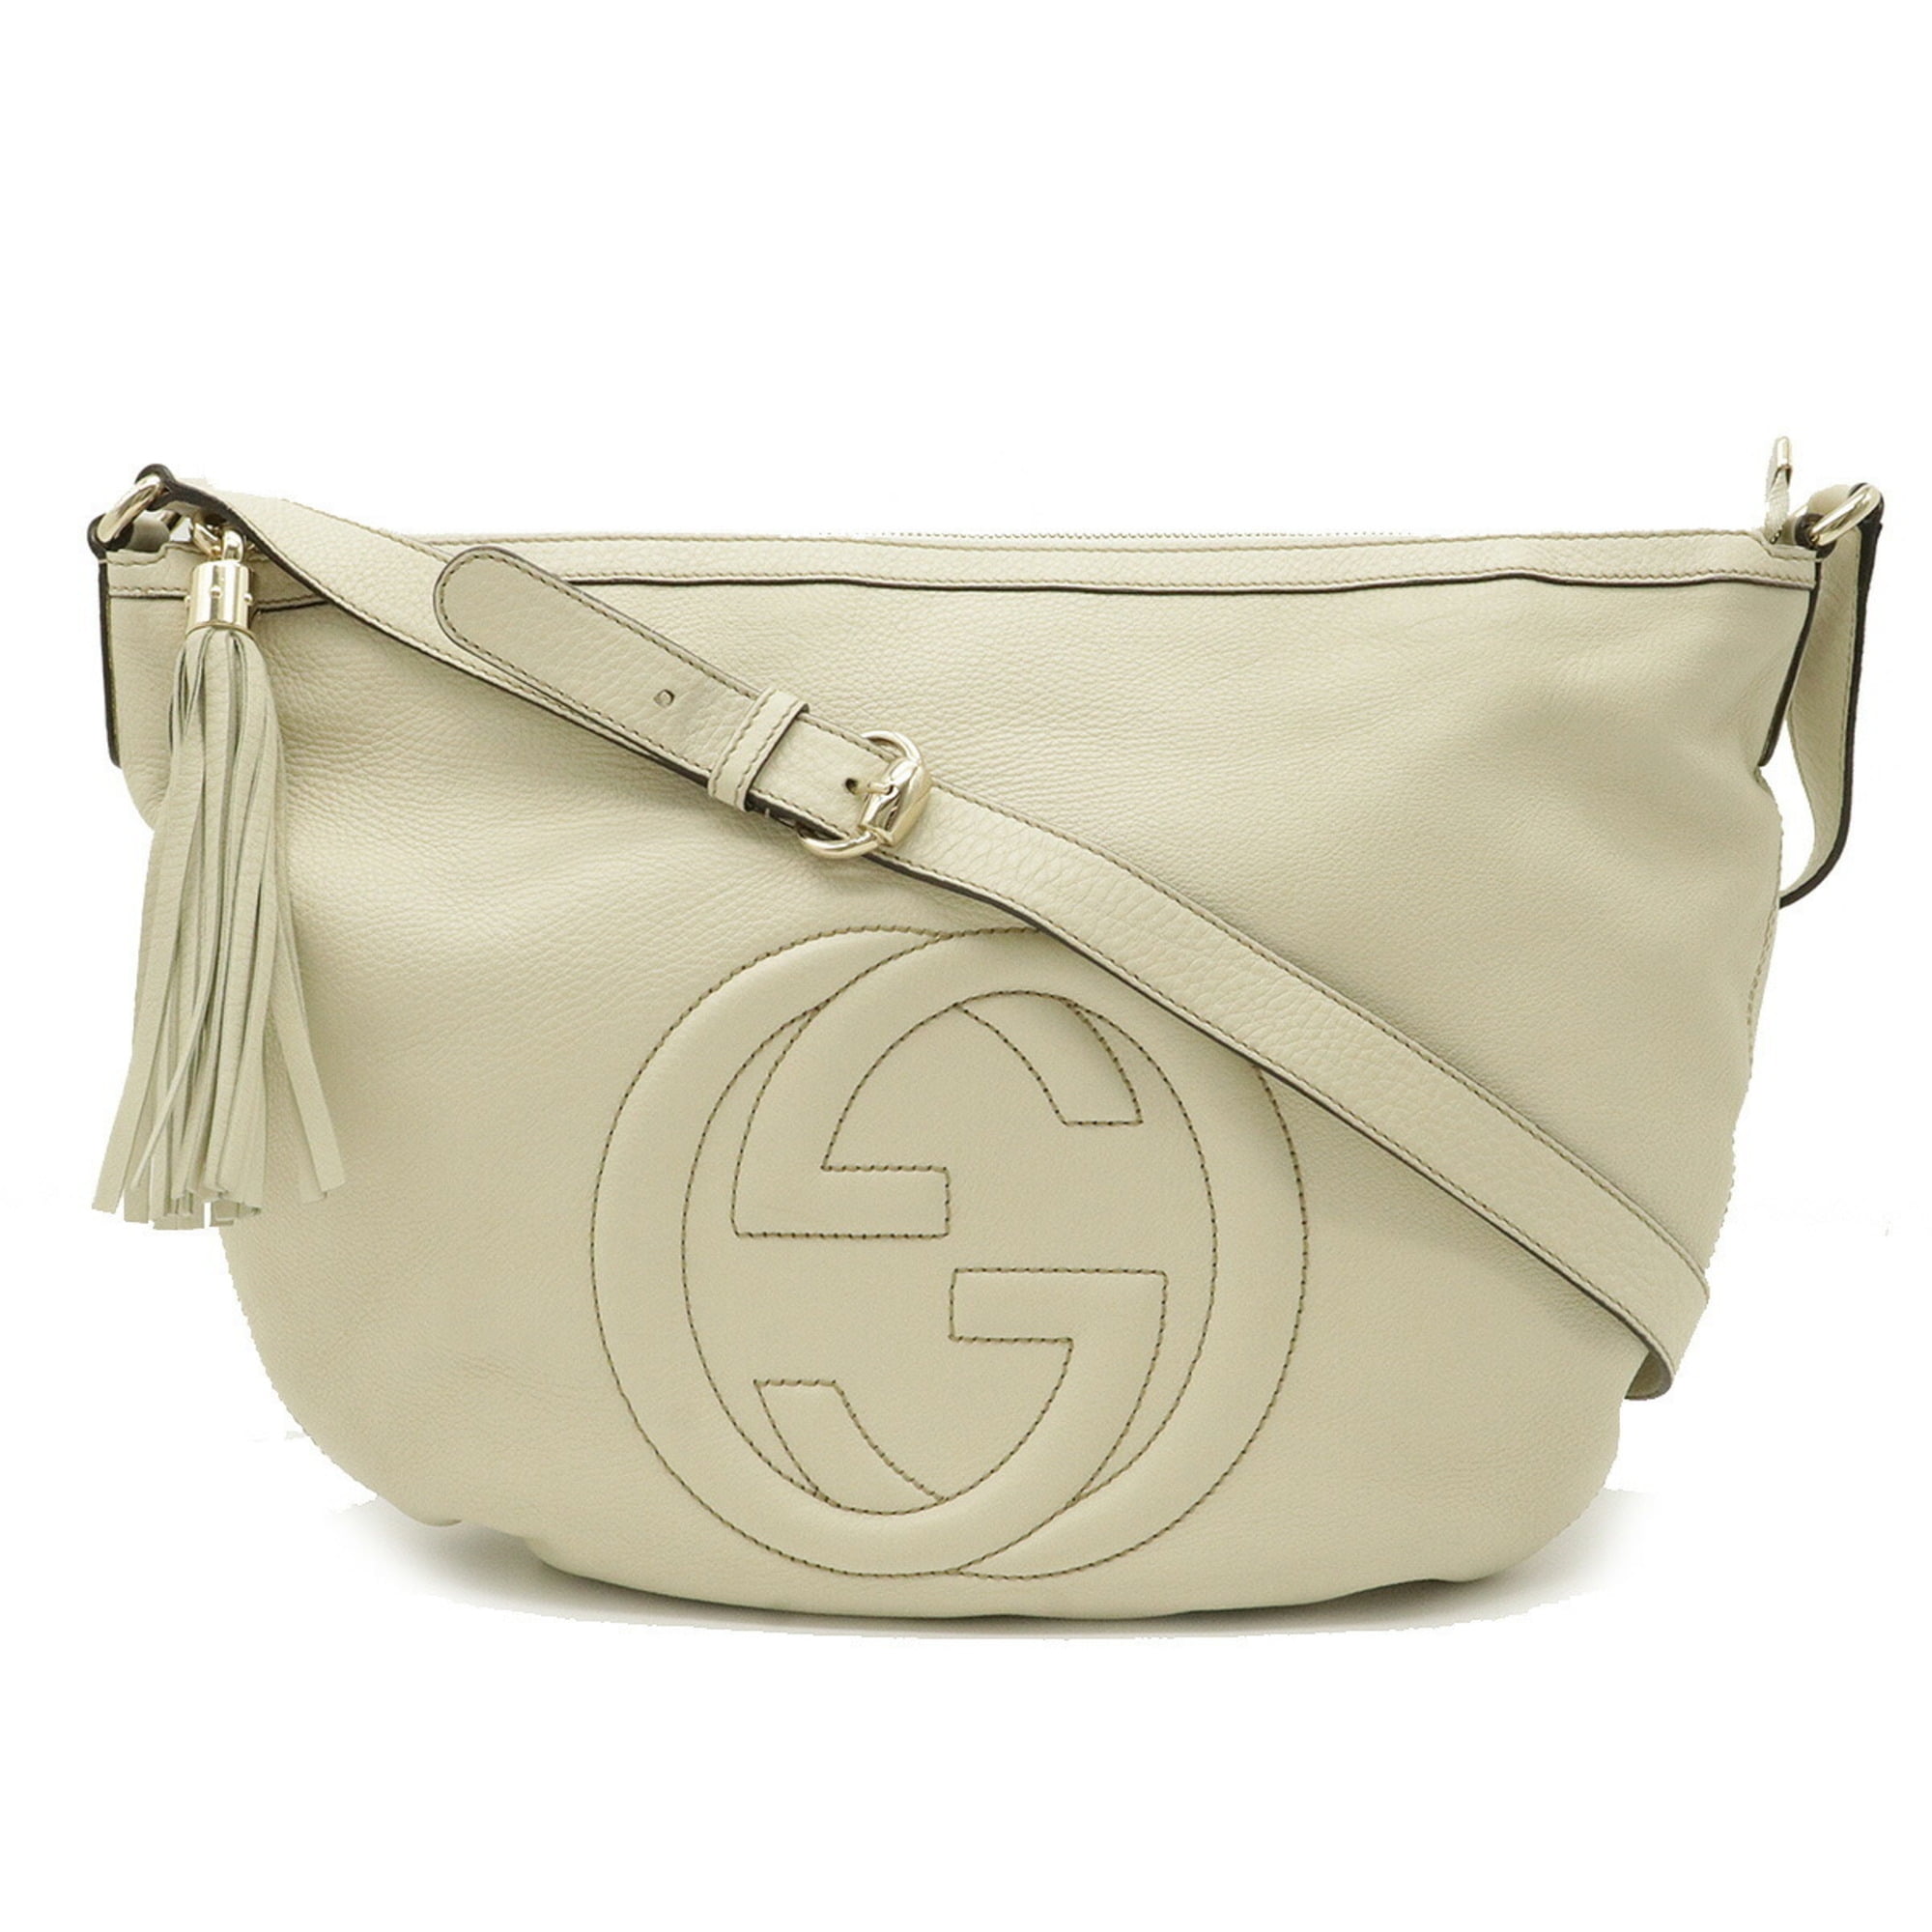 Gucci Multi-function Bag with Interlocking G